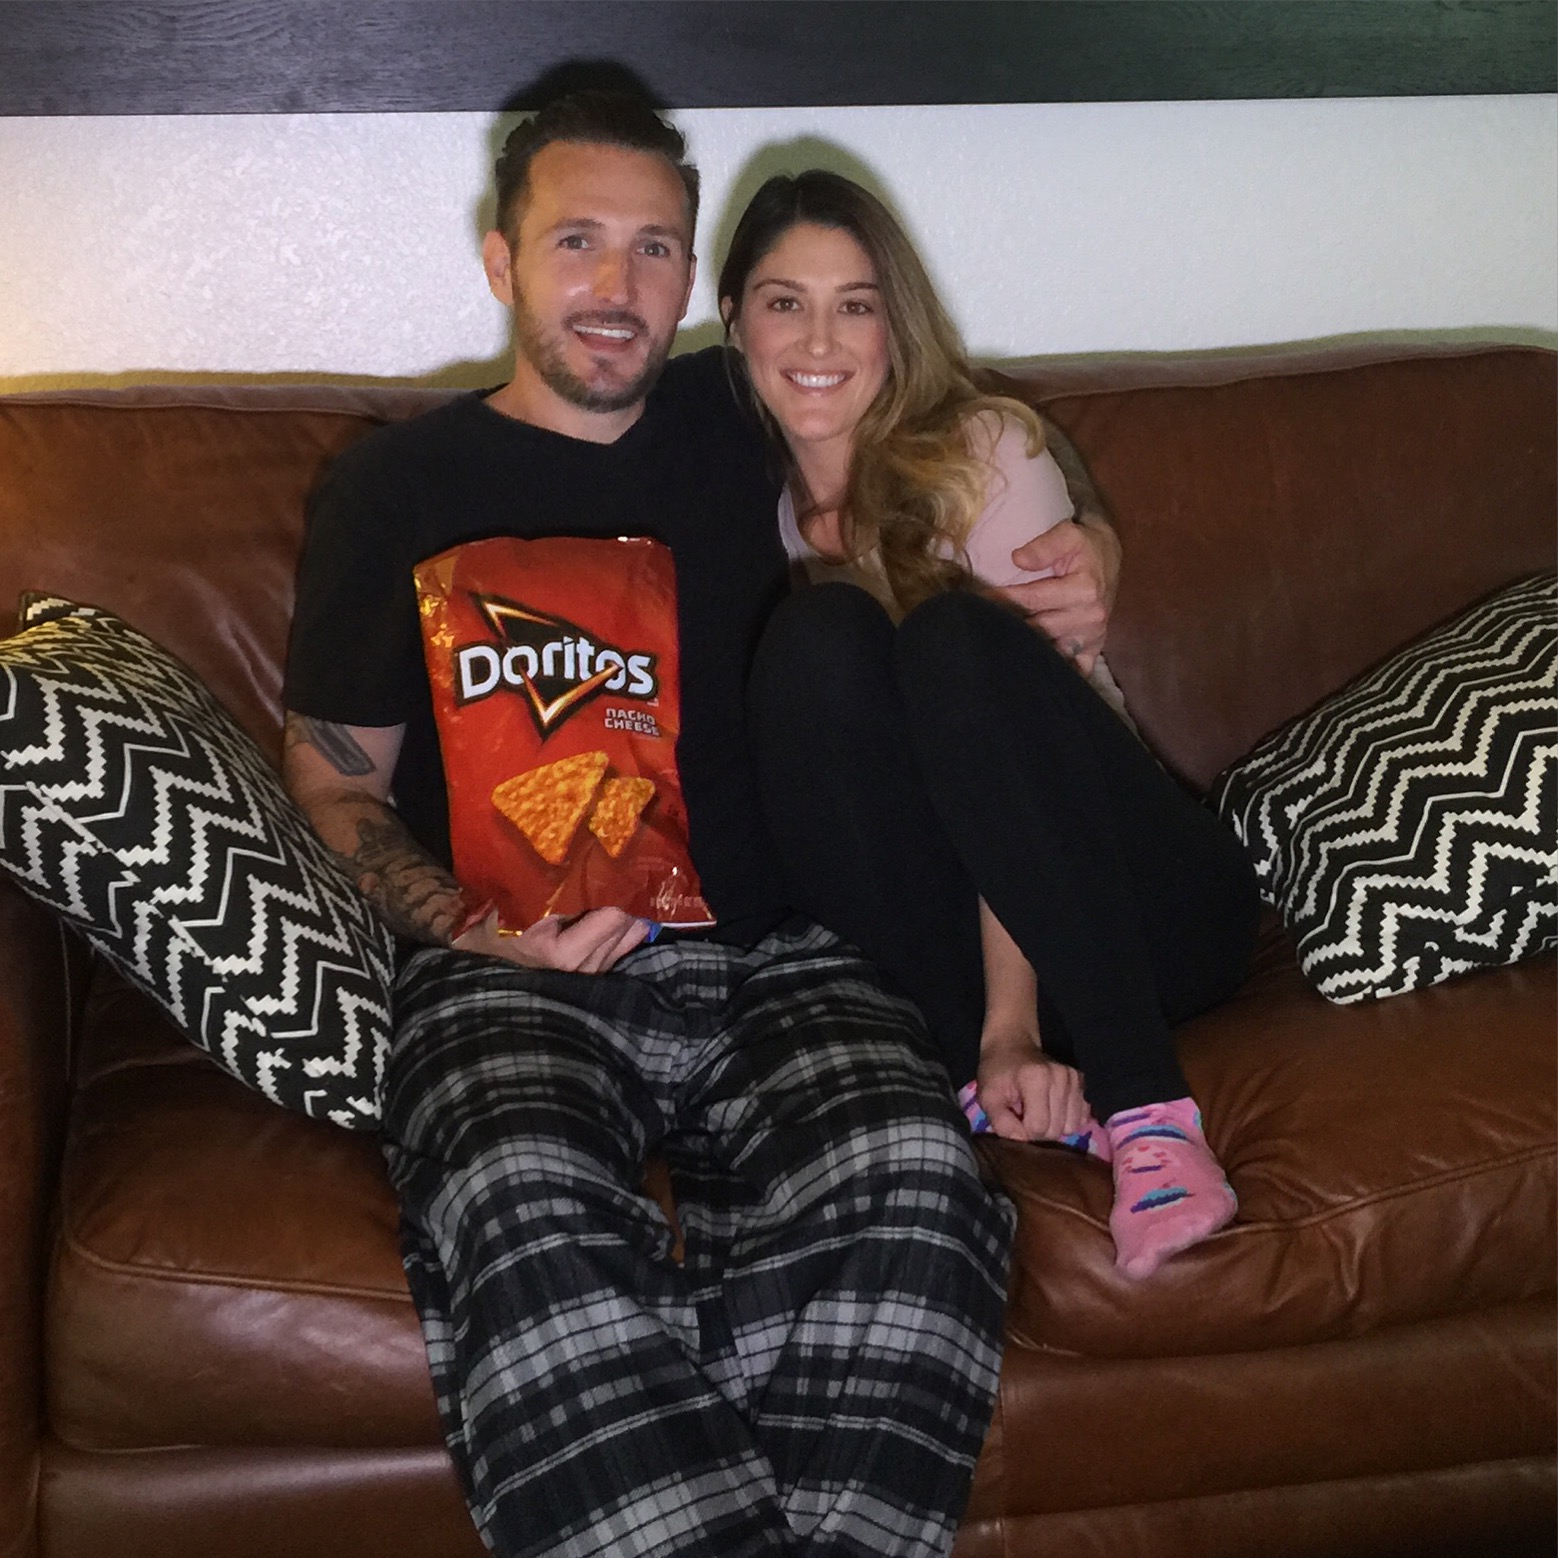 Dustin Roller & Brittany Bower filming #doritosandchill for the Doritos Crash The Super Bowl Contest.